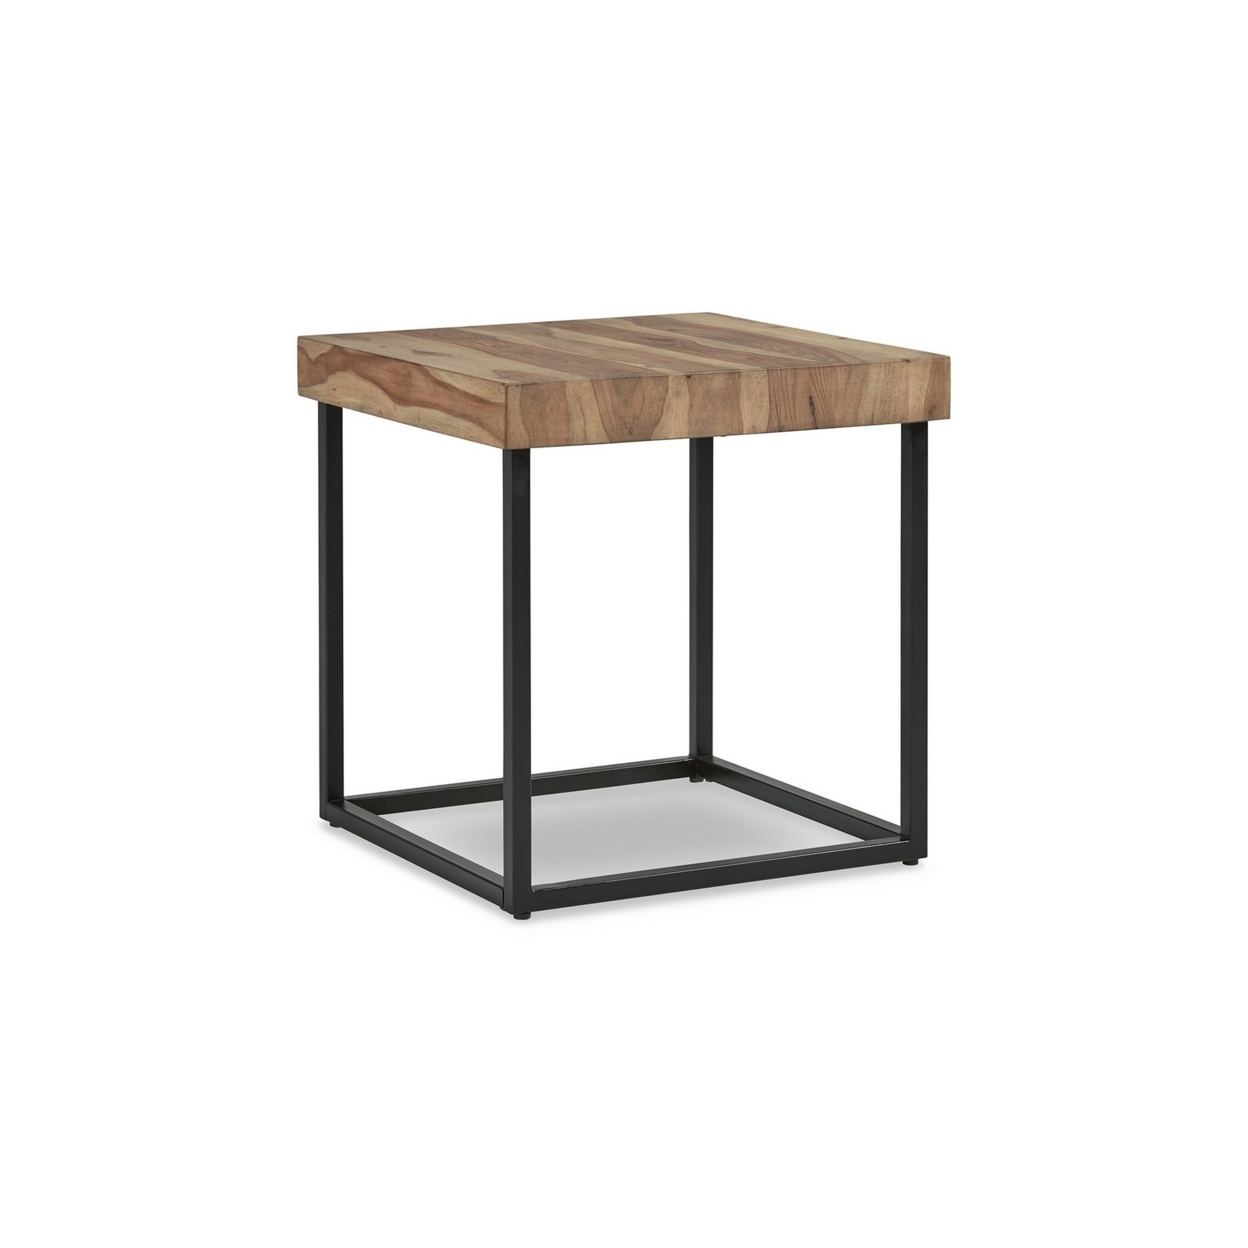 24 Inch Square Side End Table, Natural Brown Wood Top, Black Metal Base- Saltoro Sherpi